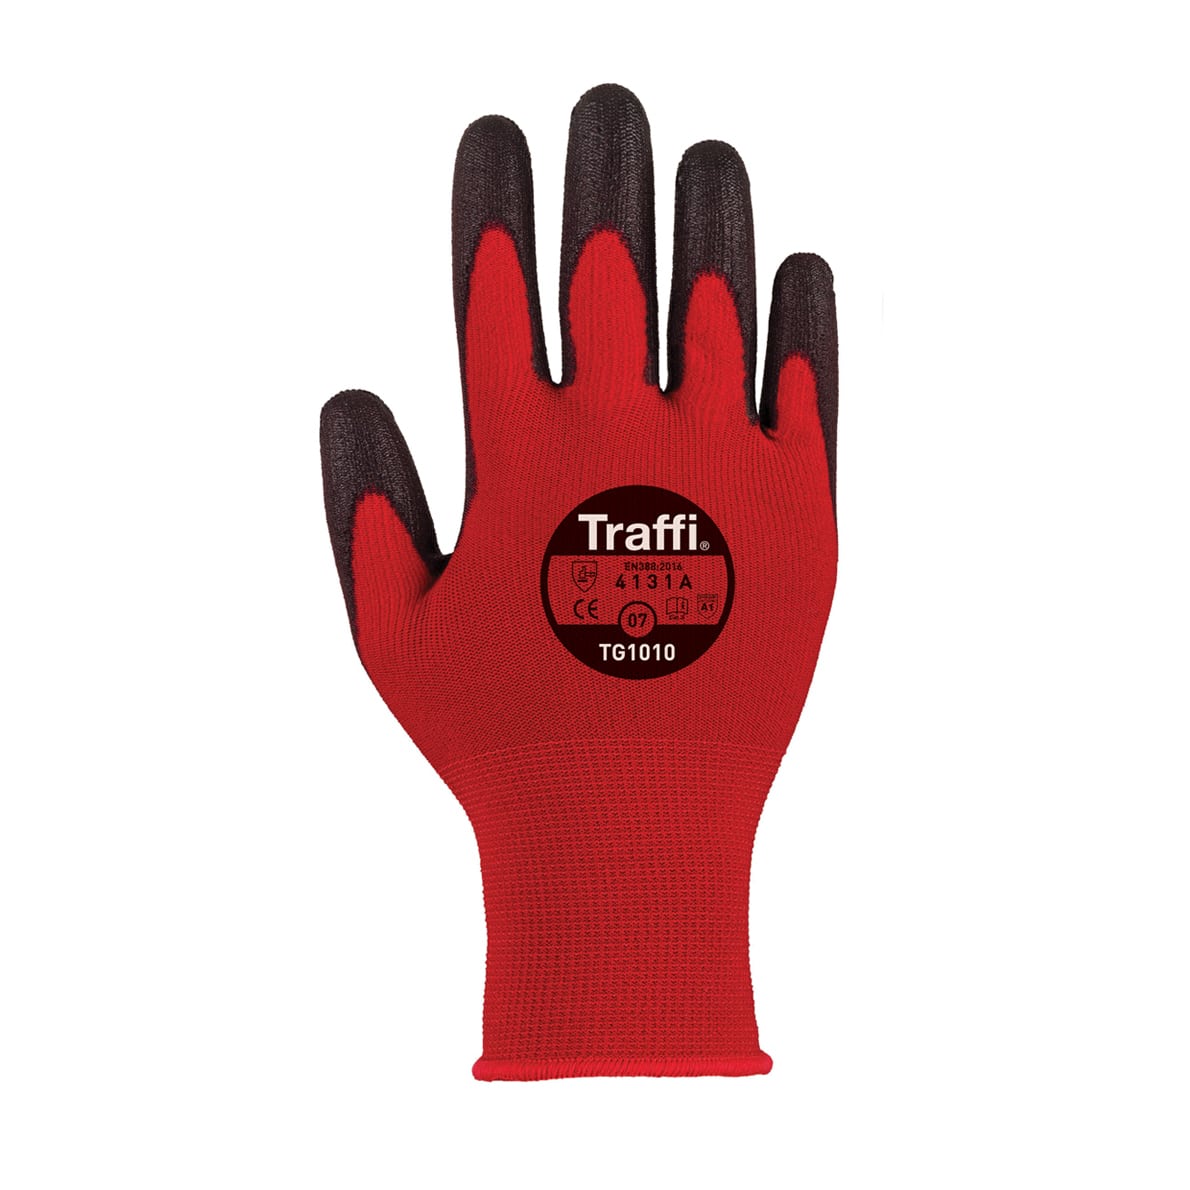 Size 10 TG1010 Red Traffi Gloves